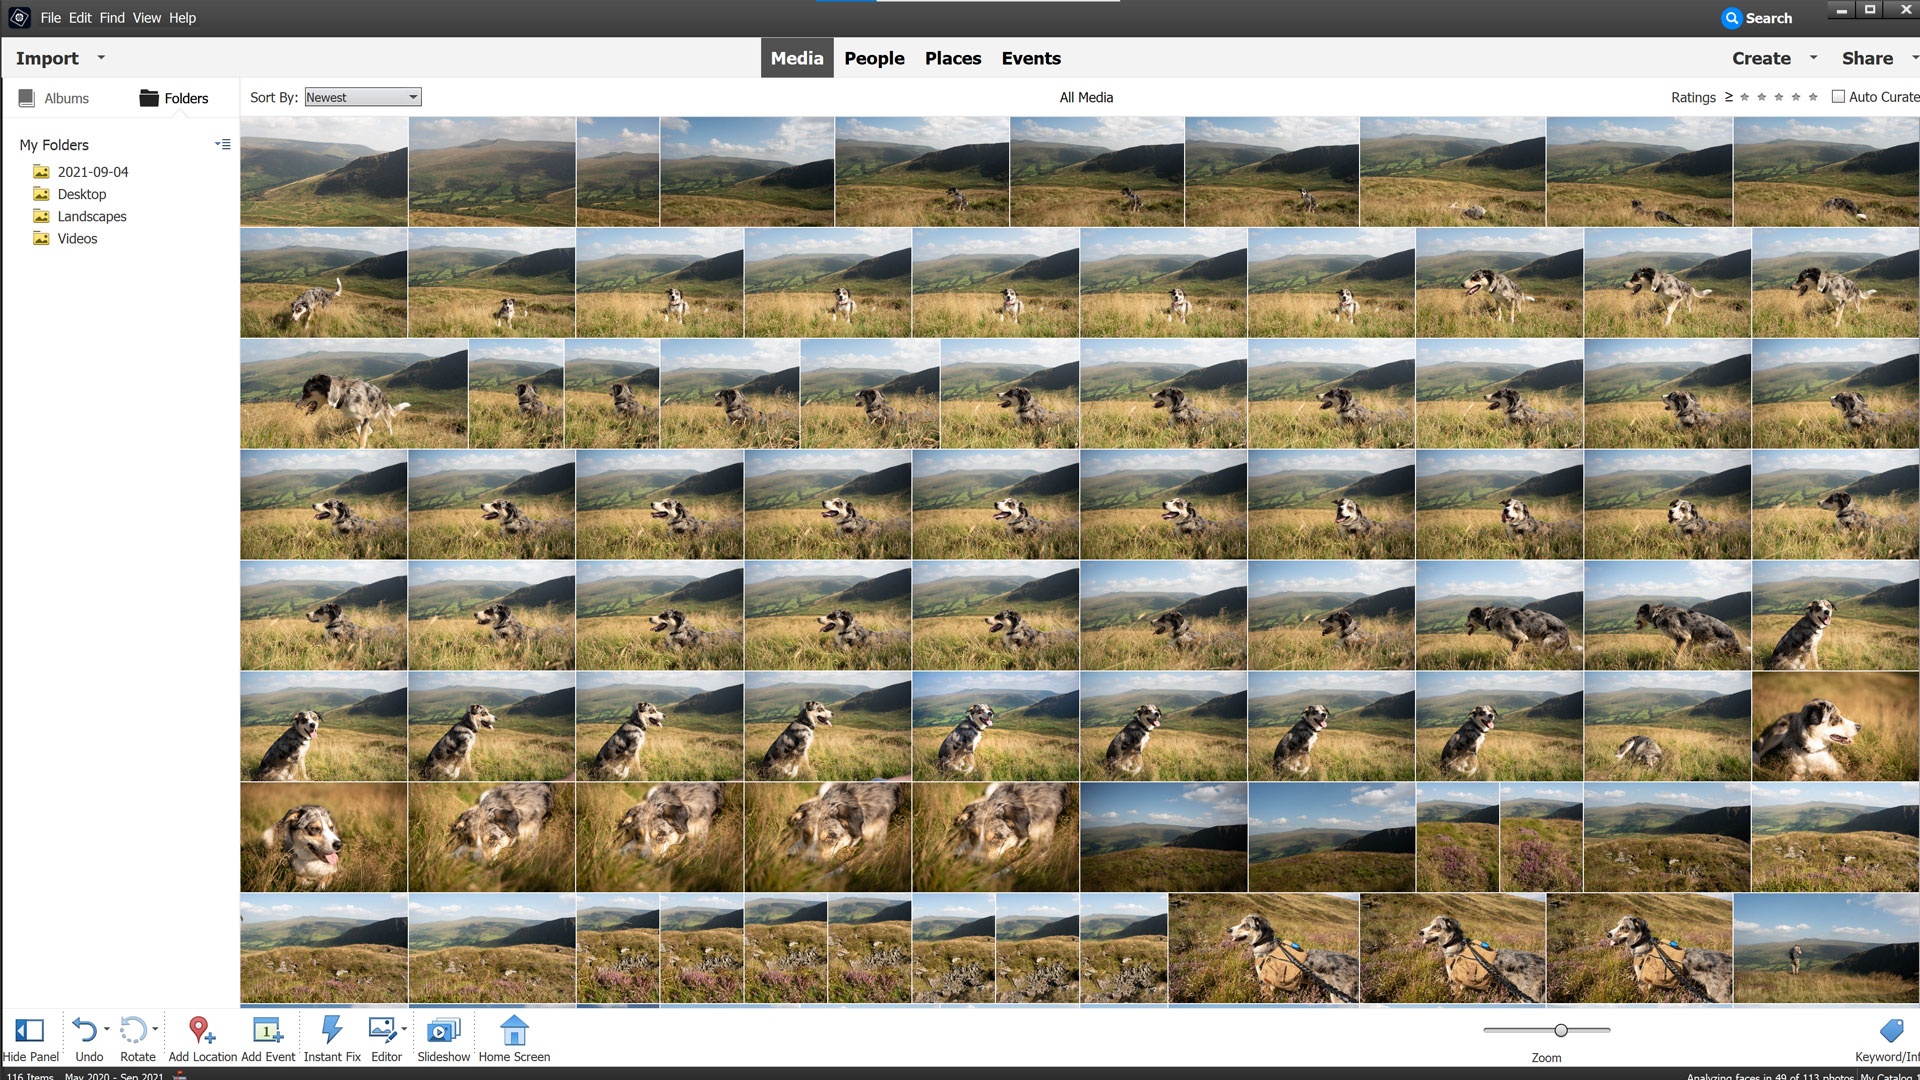 Interface of Adobe Elements Organizer, among the best photo organizing software